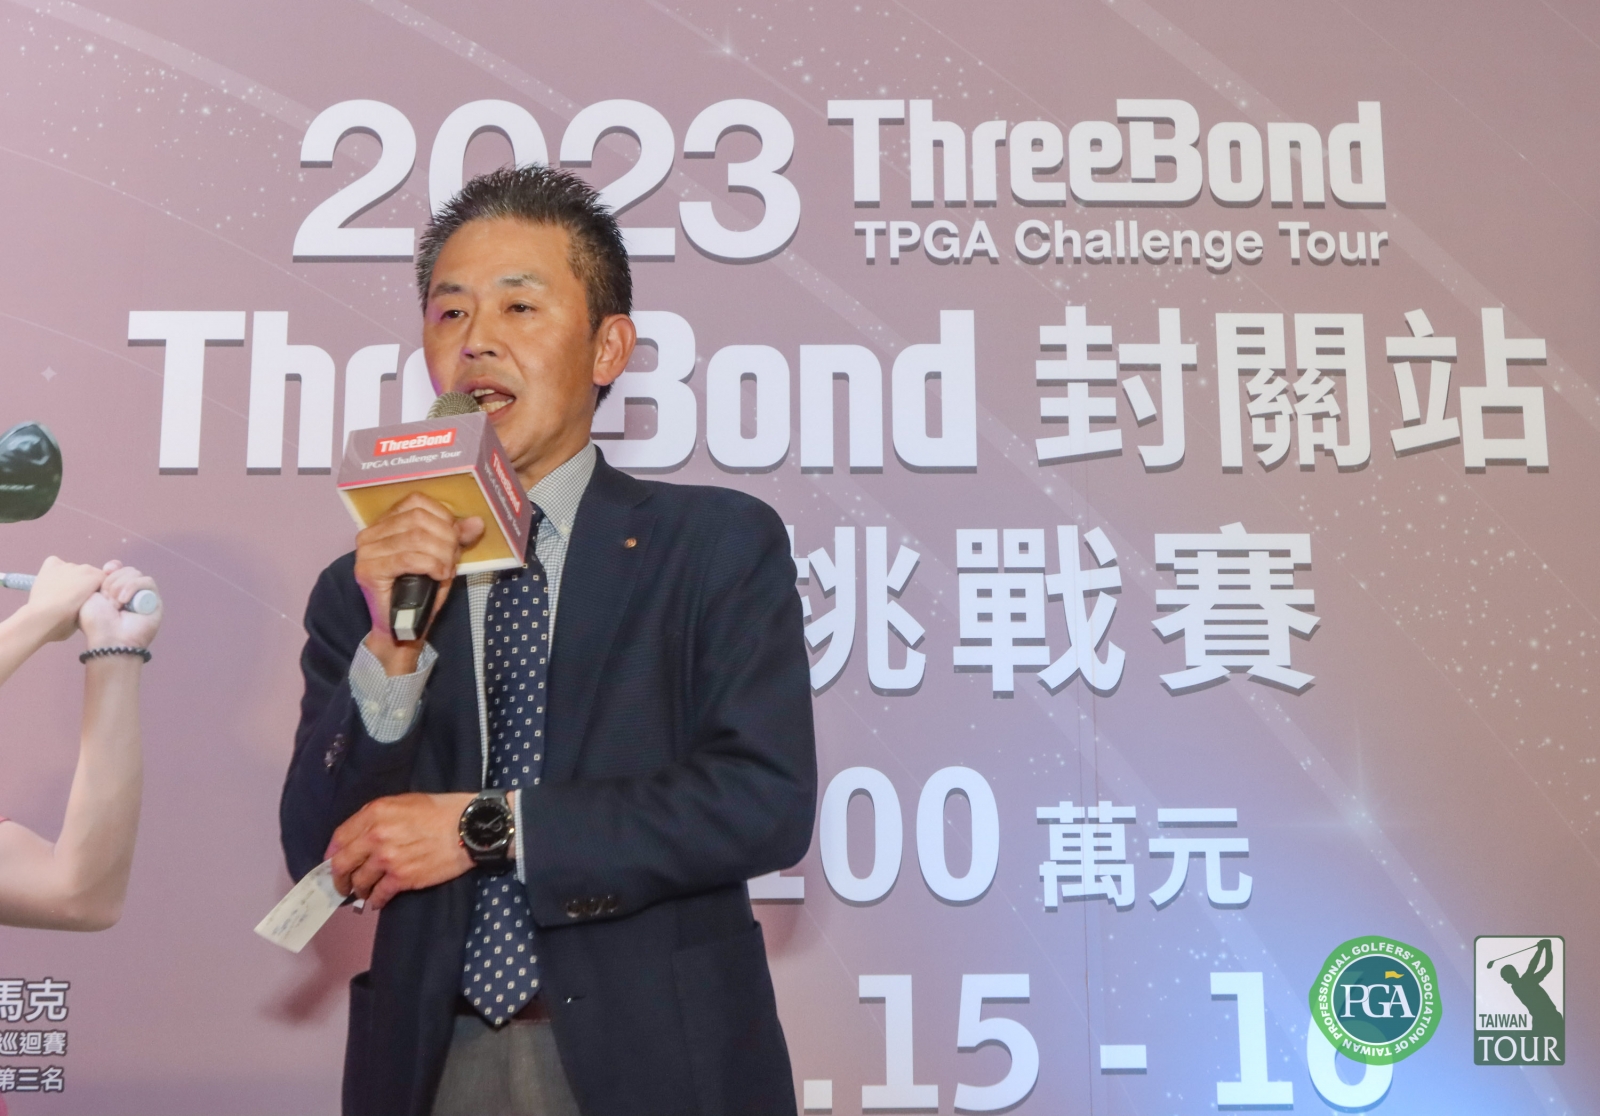 ThreeBond香港有限公司社長植松勝之於2023threebond封關站菁英挑戰賽配對賽午宴致詞